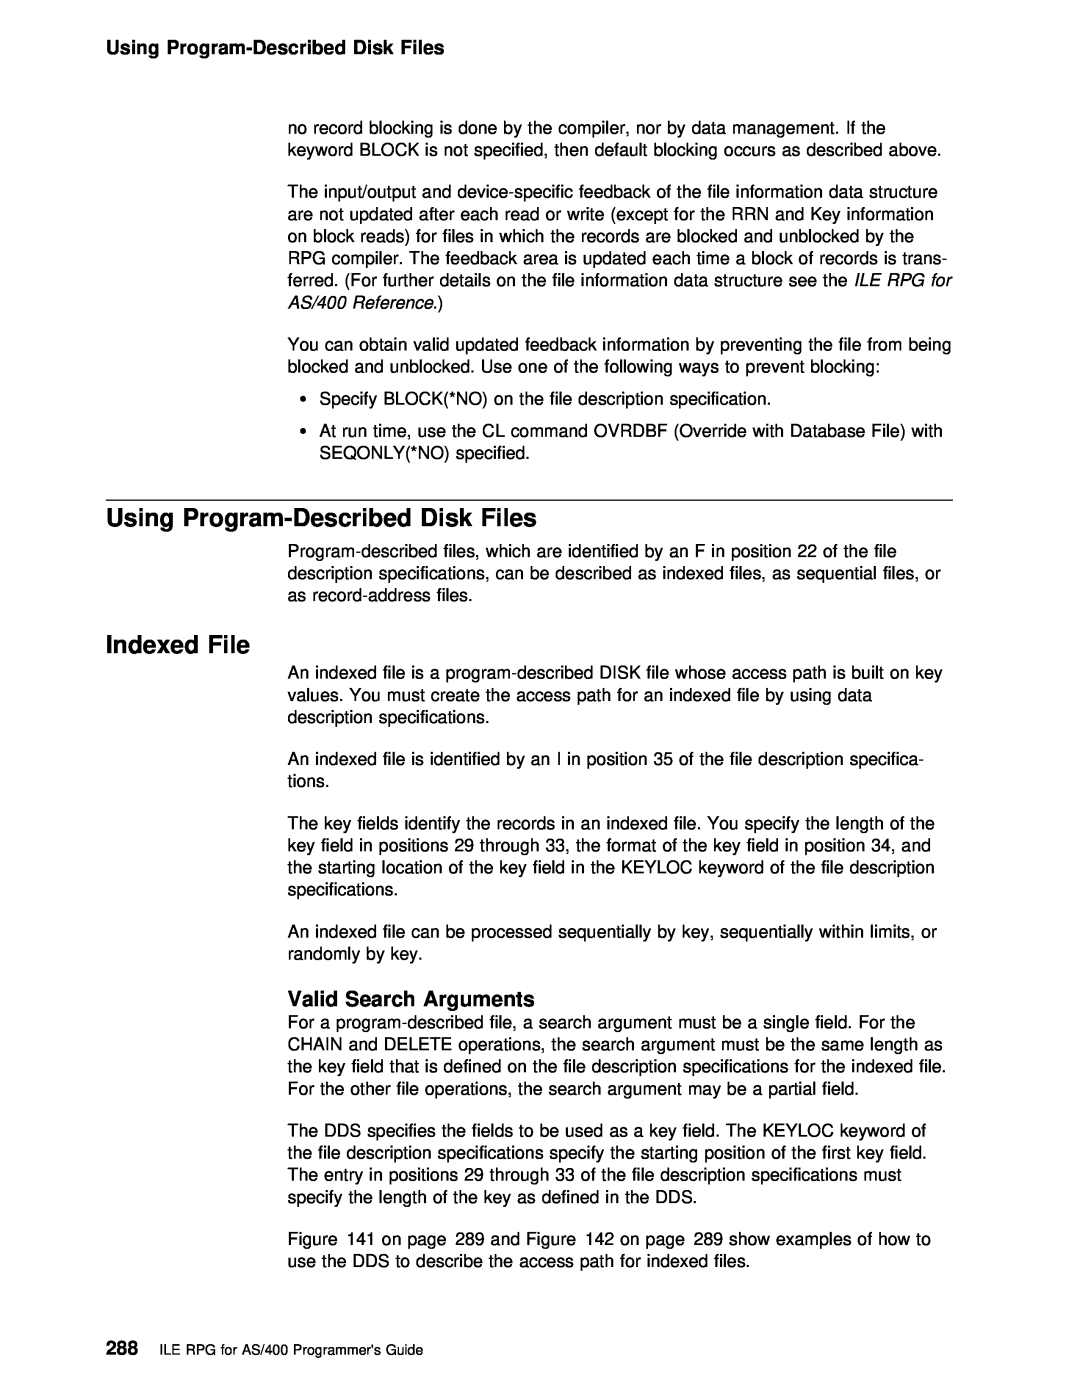 IBM AS/400 manual Using Program-Described Disk Files, Indexed File, Arguments 